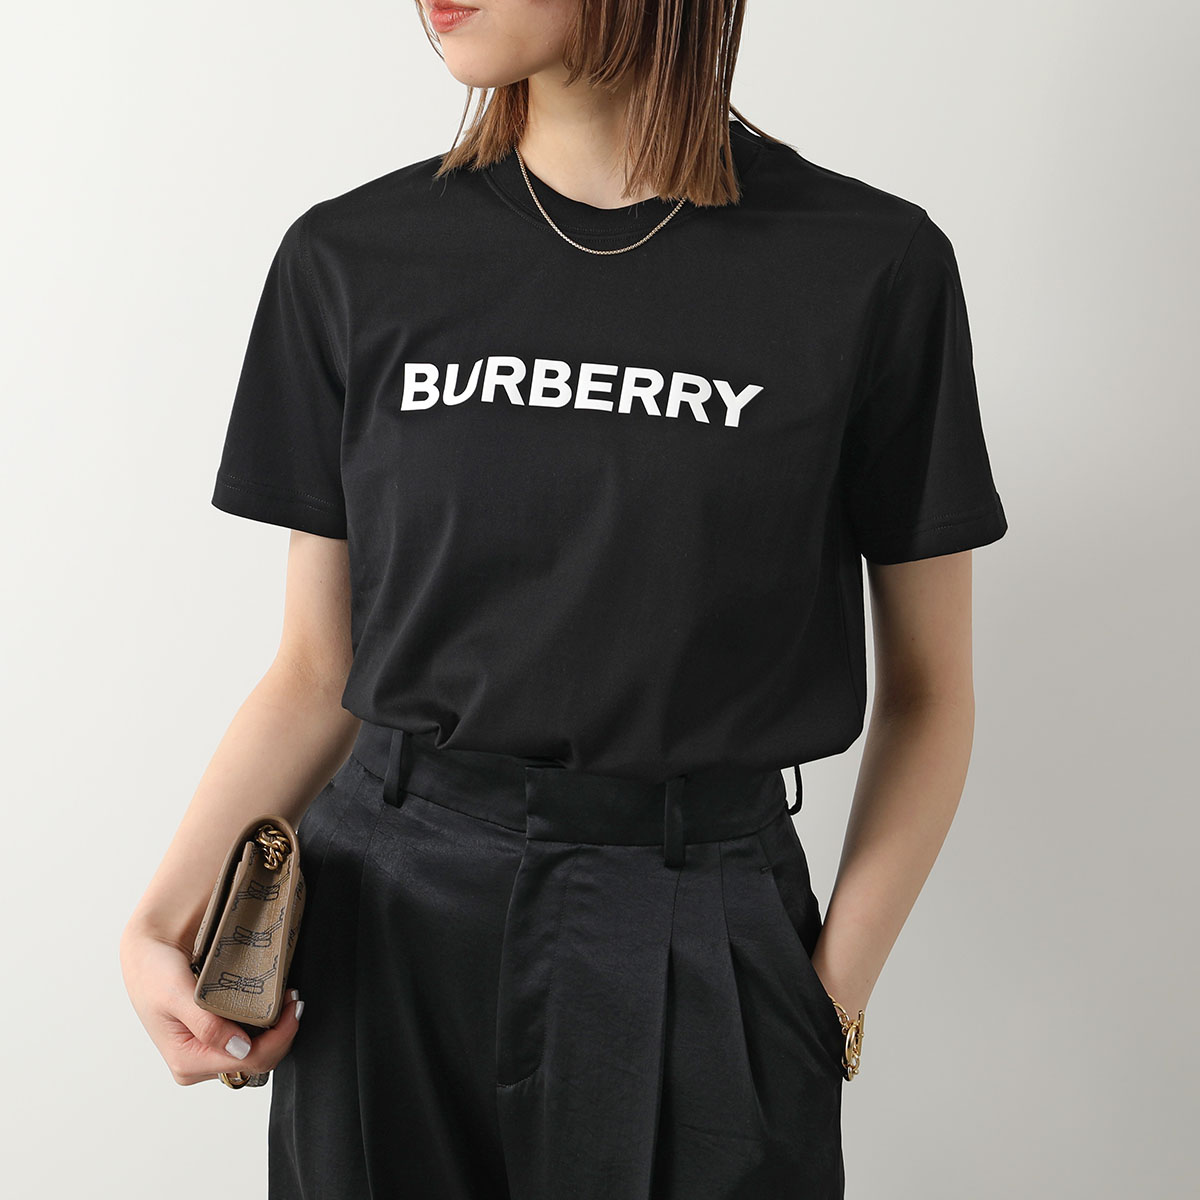 BURBERRY バーバリー Tシャツ MARGOT BRN ORG 8080325 8080324...